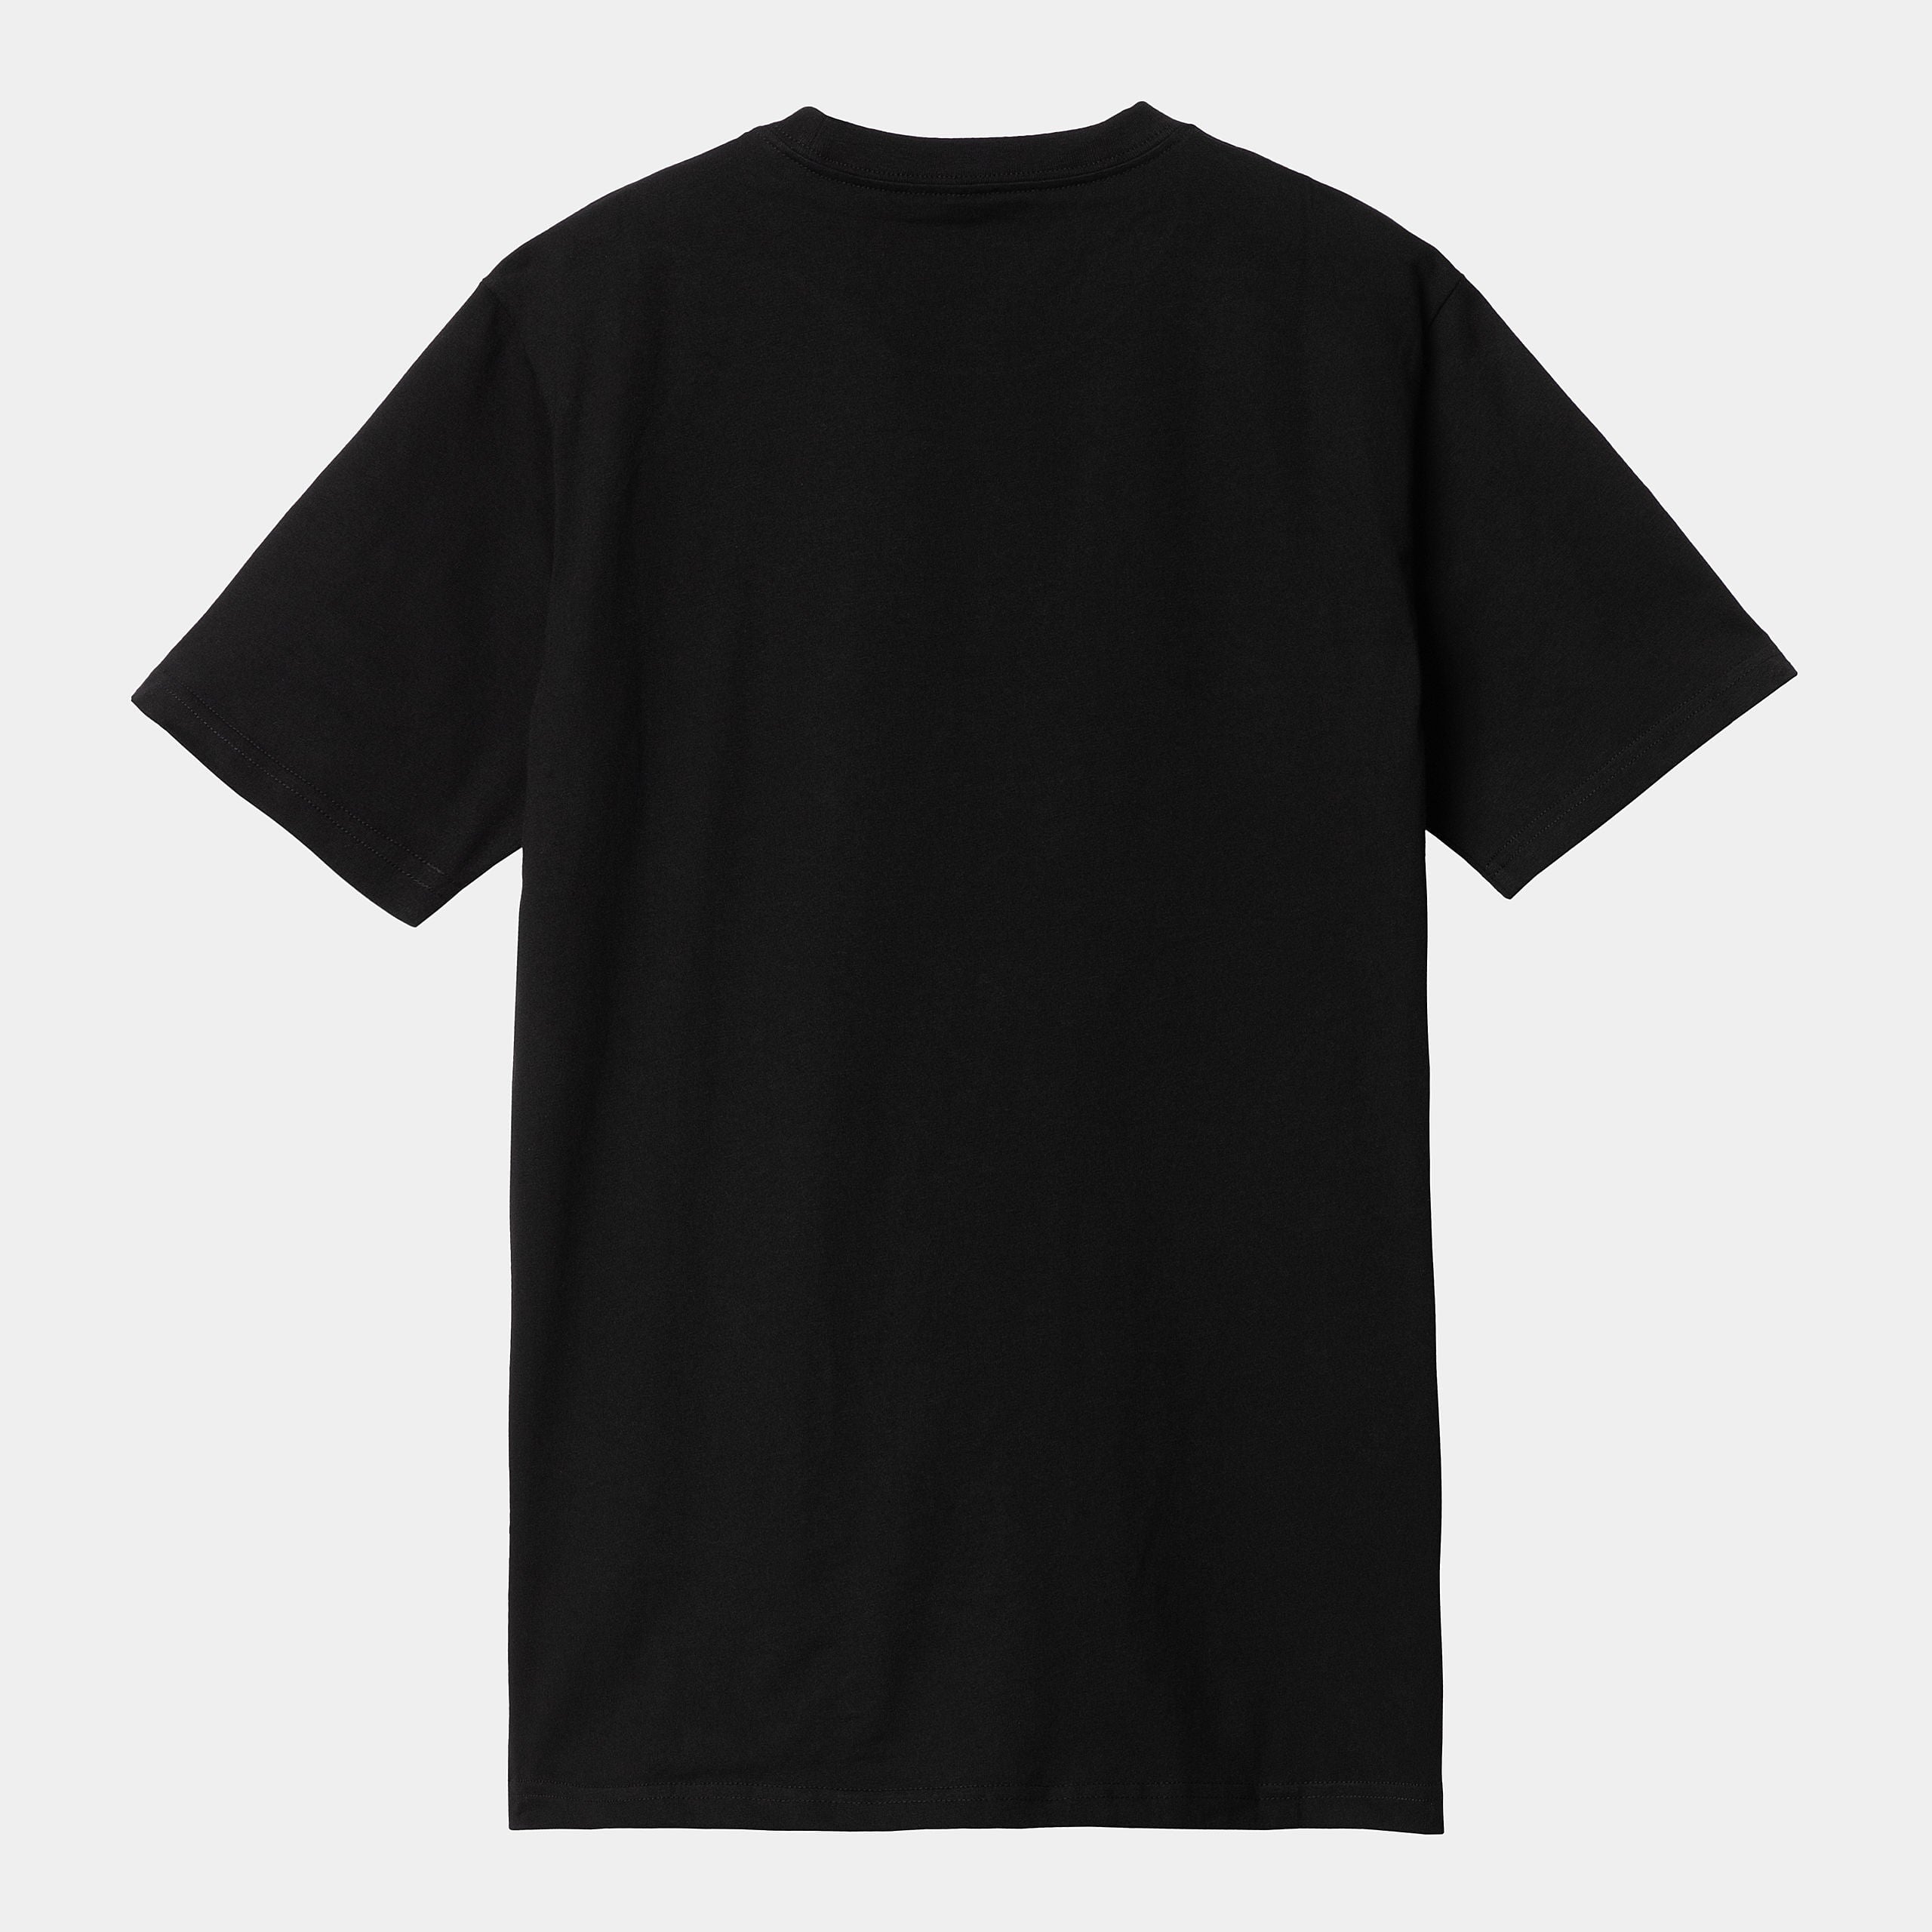 Carhartt WIP S-S Base T-Shirt - Black-White T-Shirt Carhartt WIP 